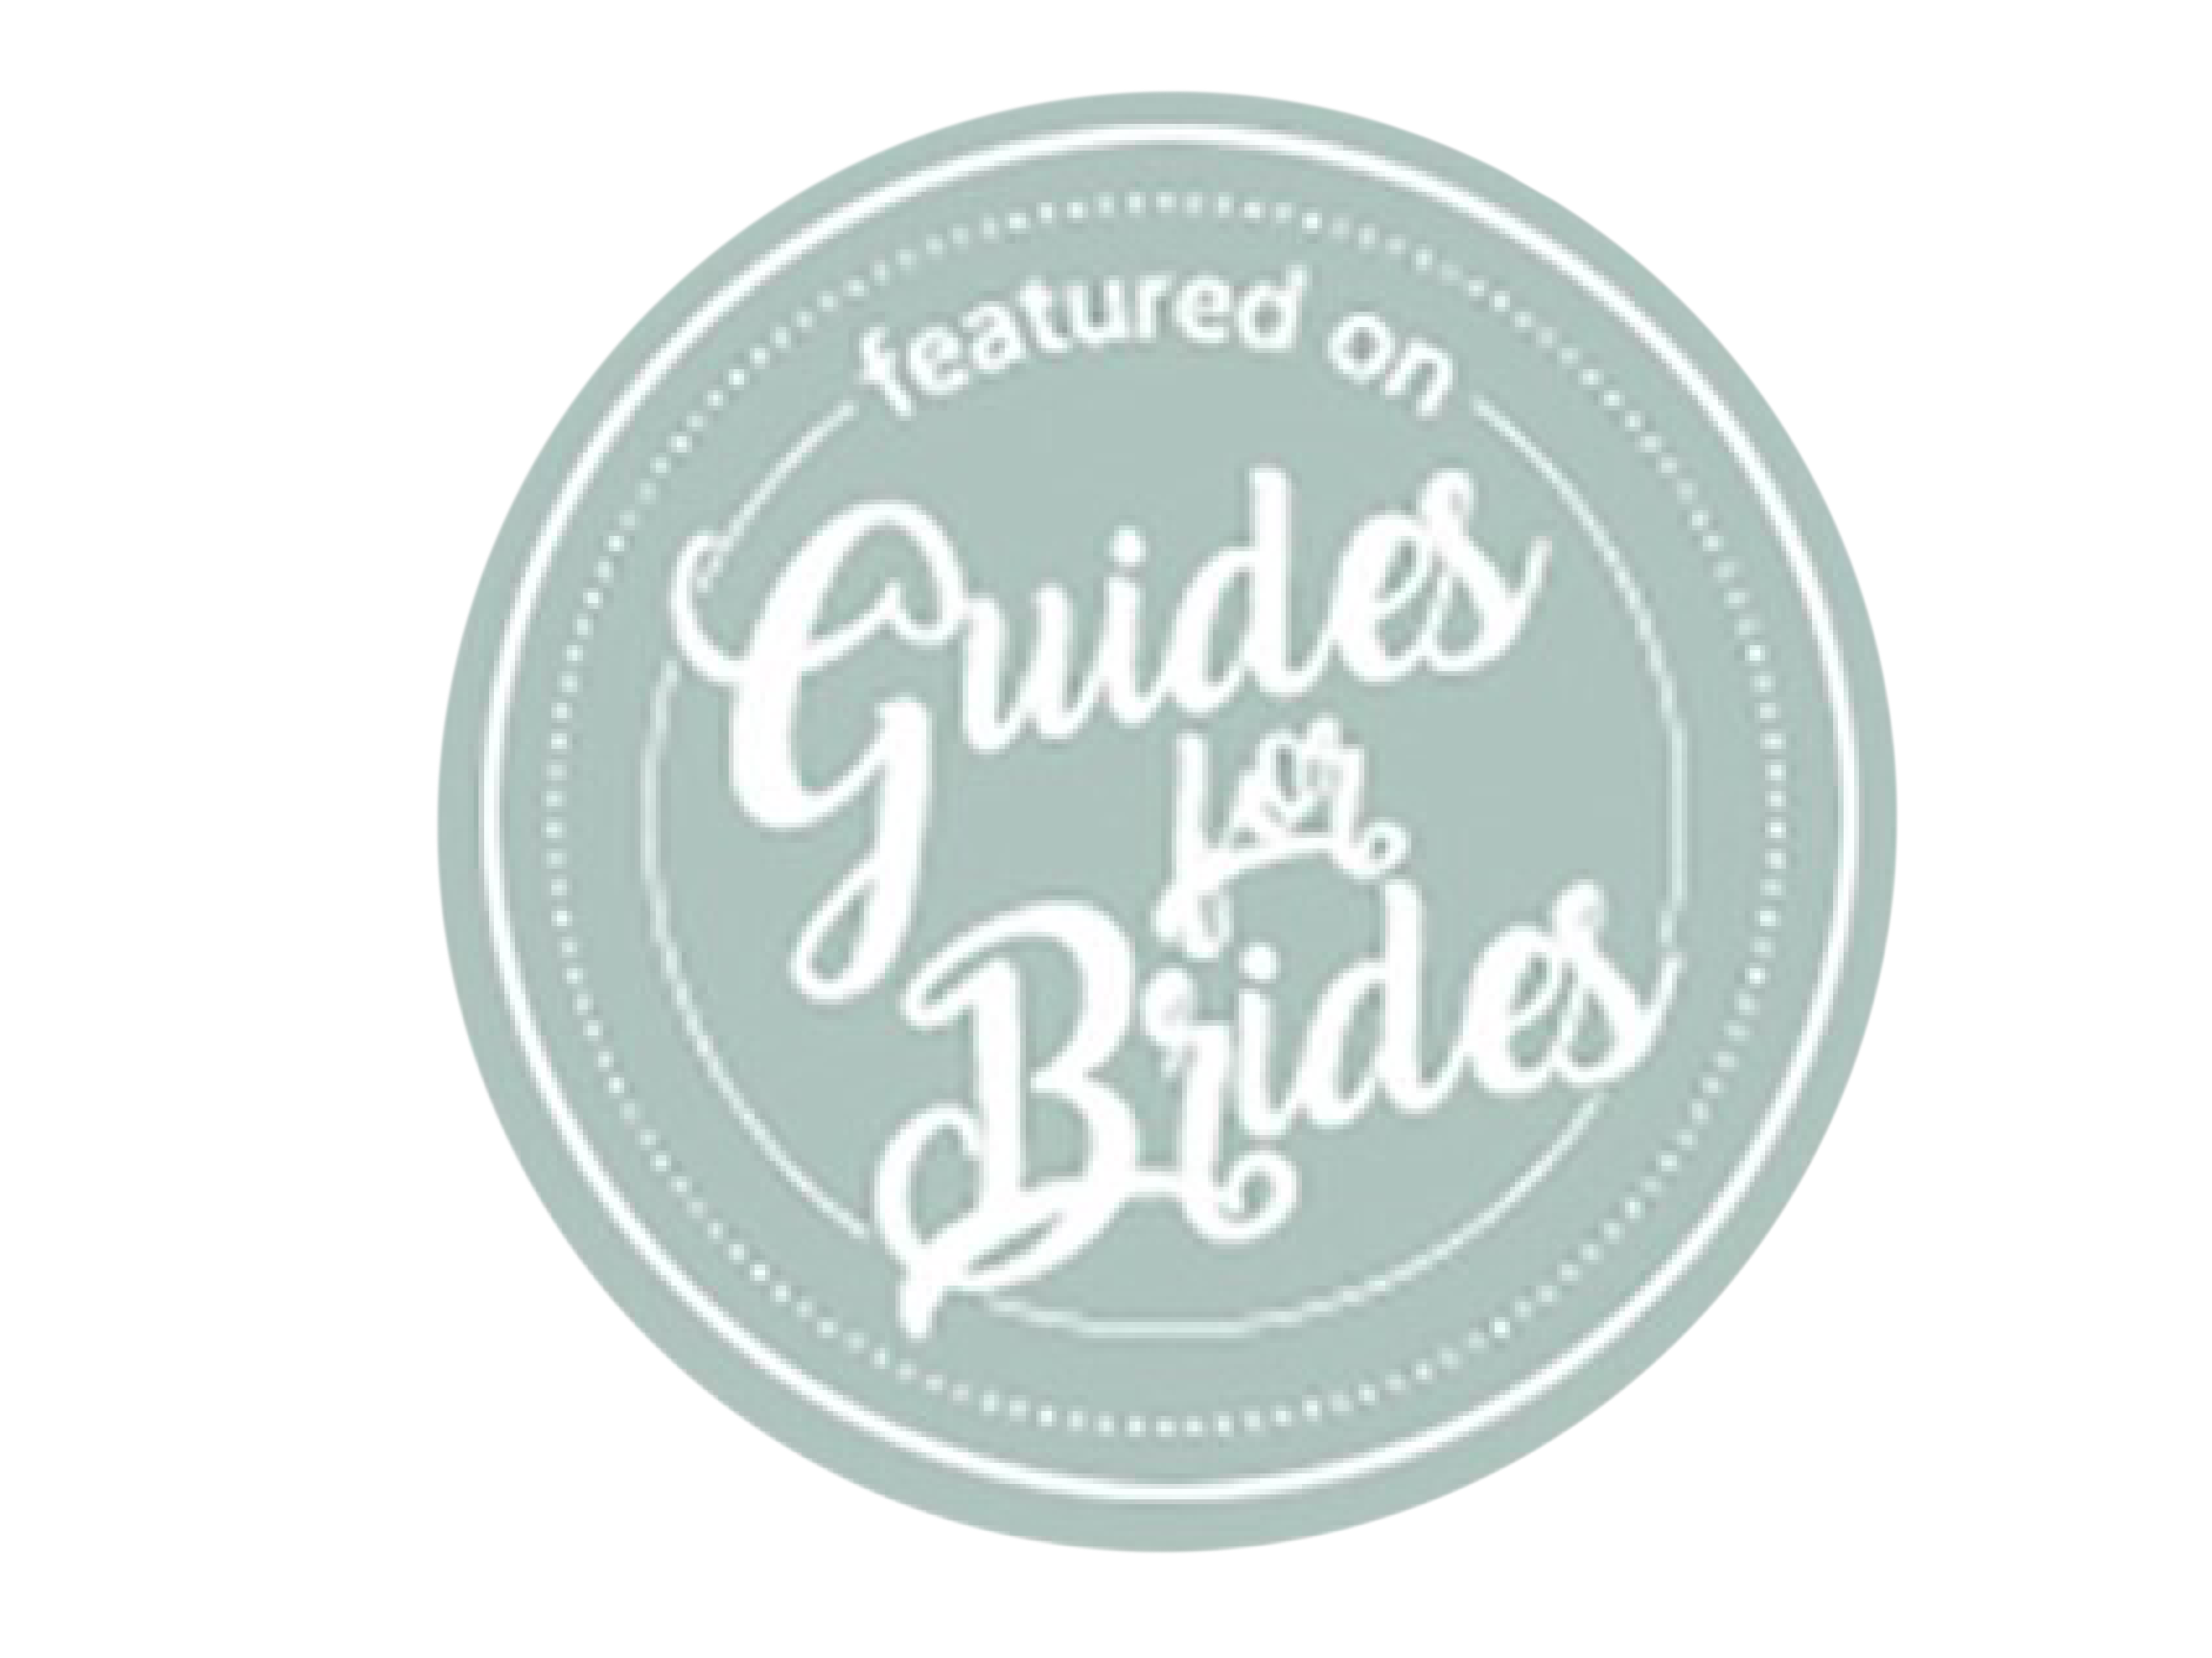 Guide For Brides Logo